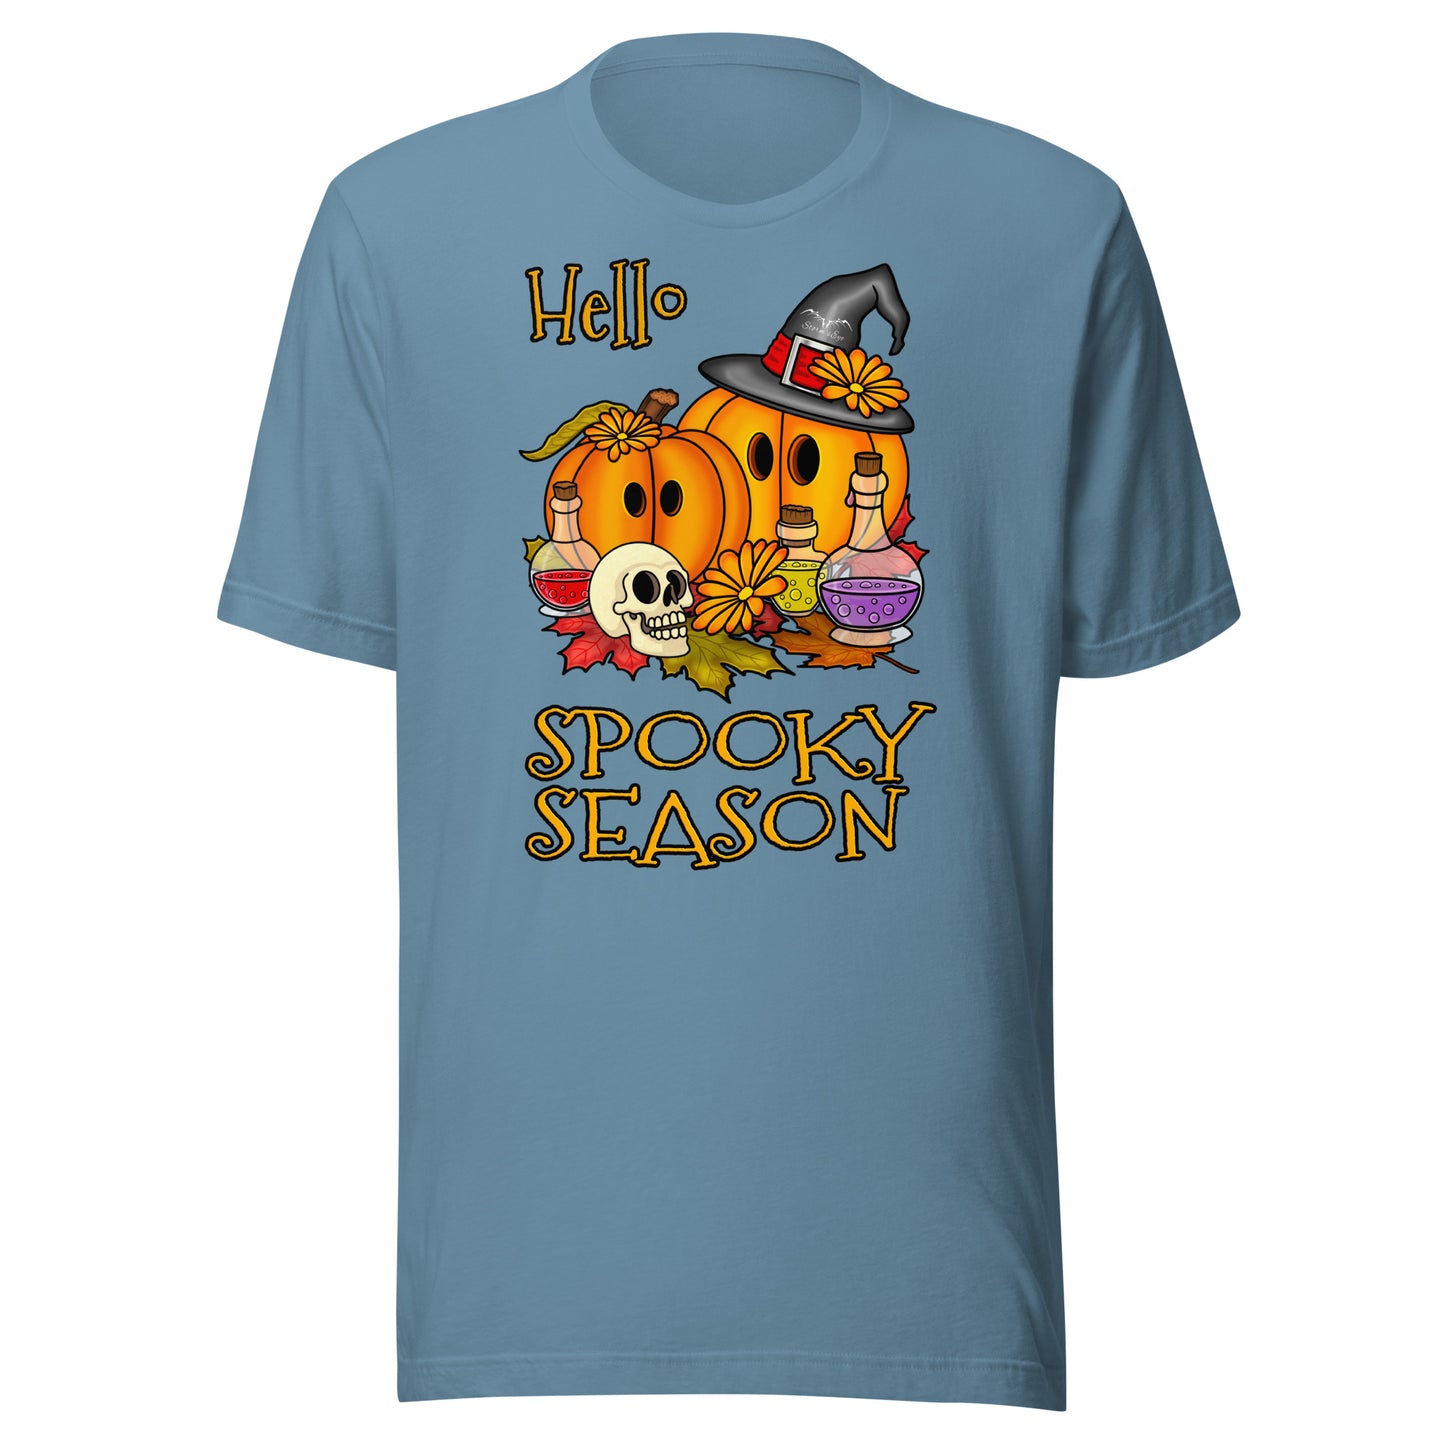 stormseye design hello spooky season halloween T shirt flat view light blue